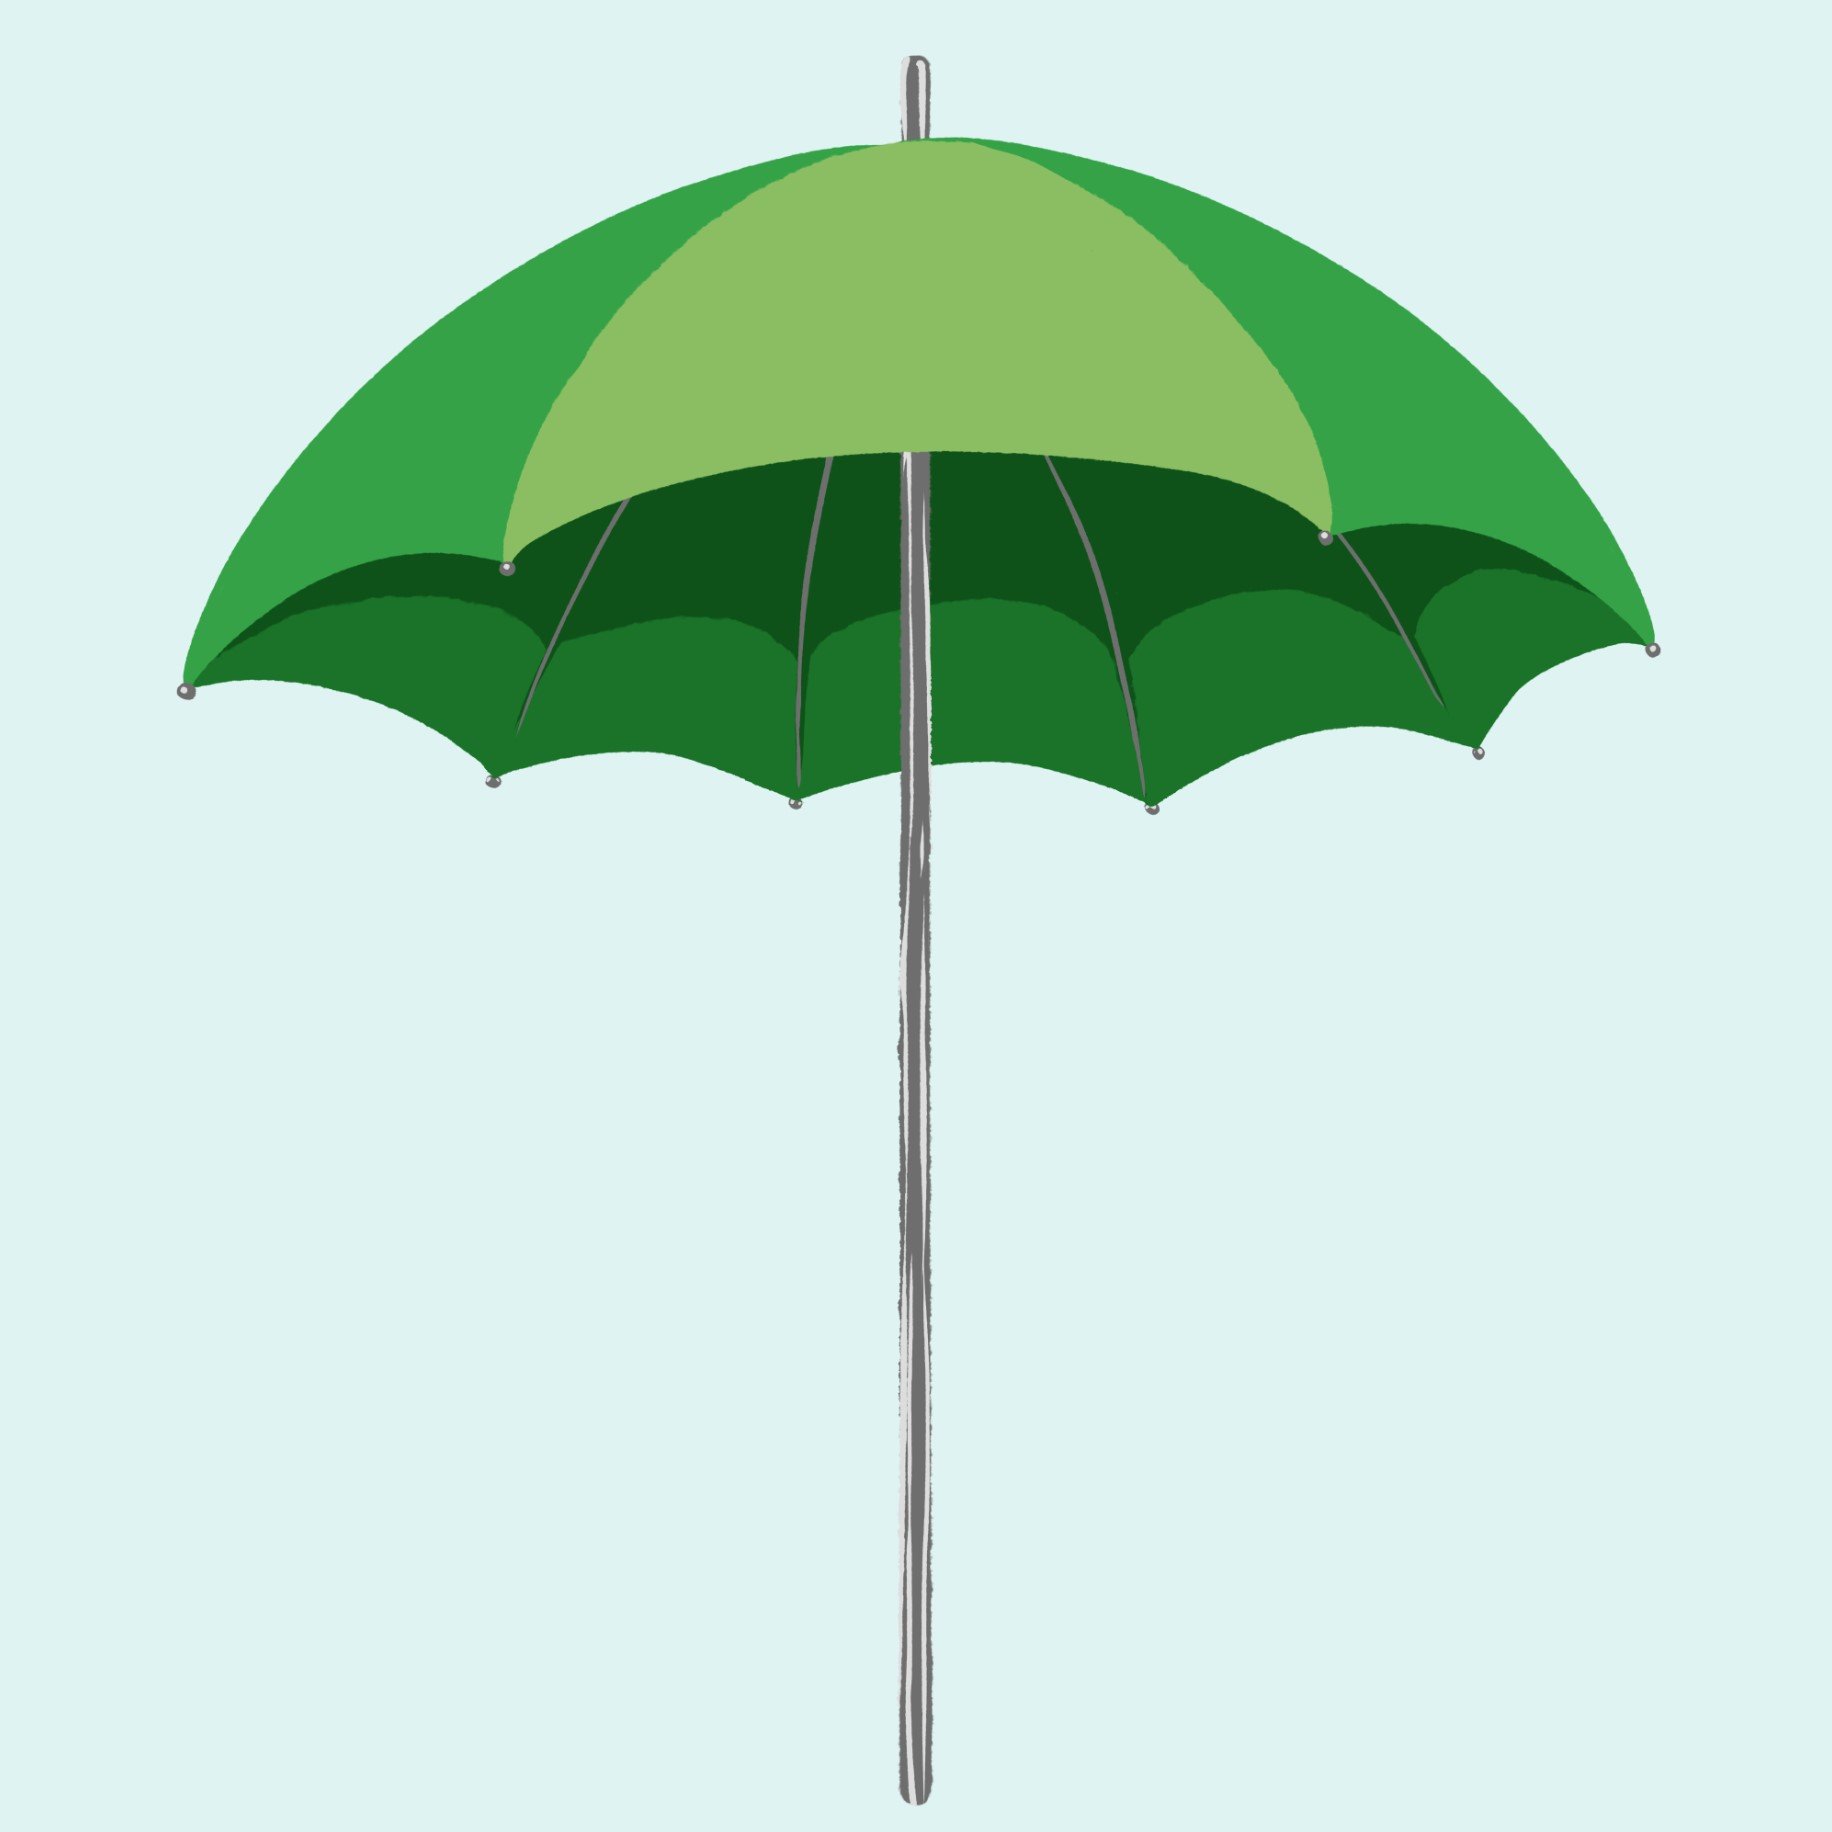 THM_UmbrellaDesign_v01.jpg